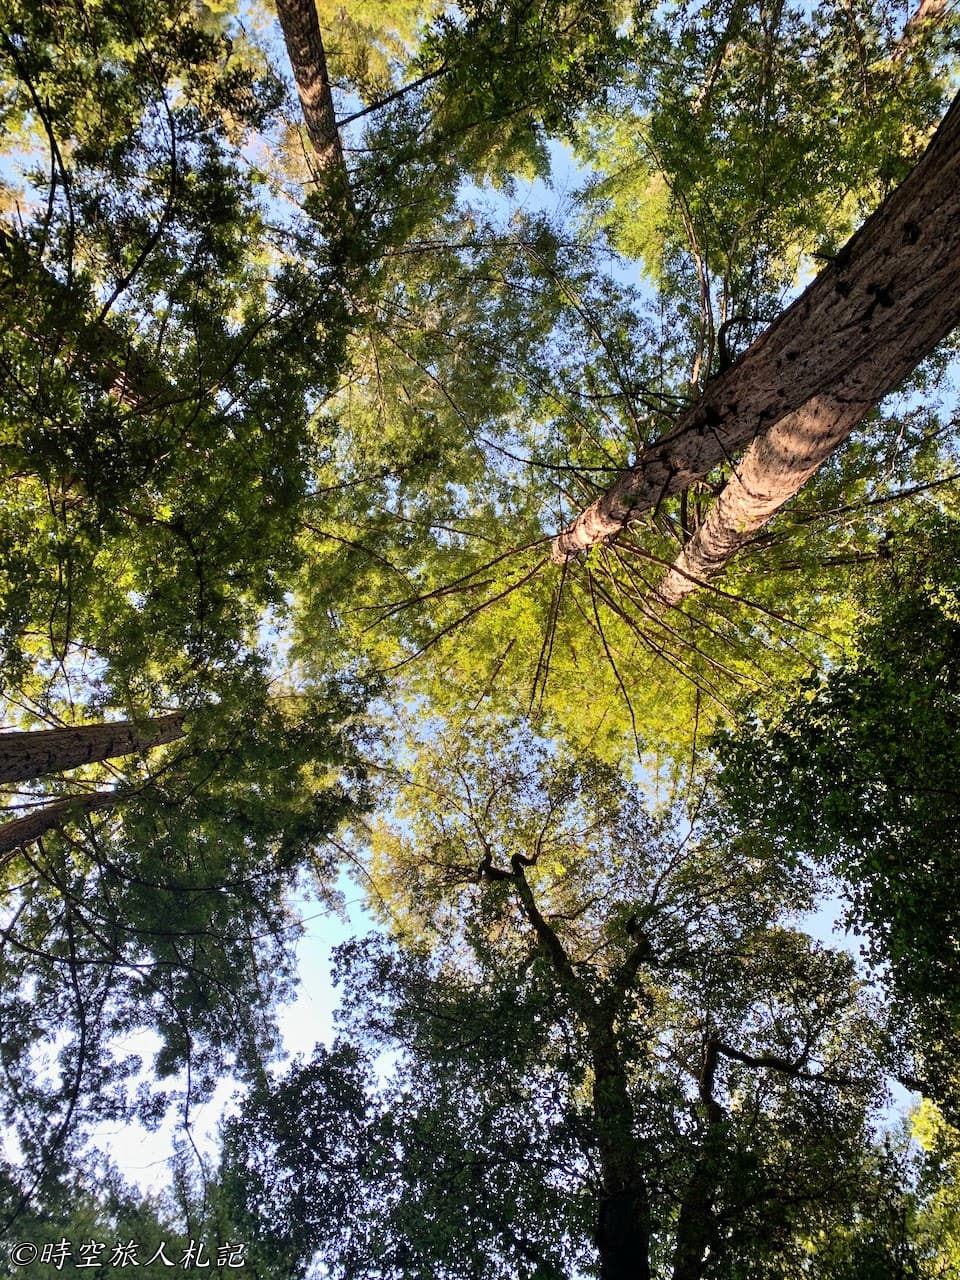 Portola redwood state park 9